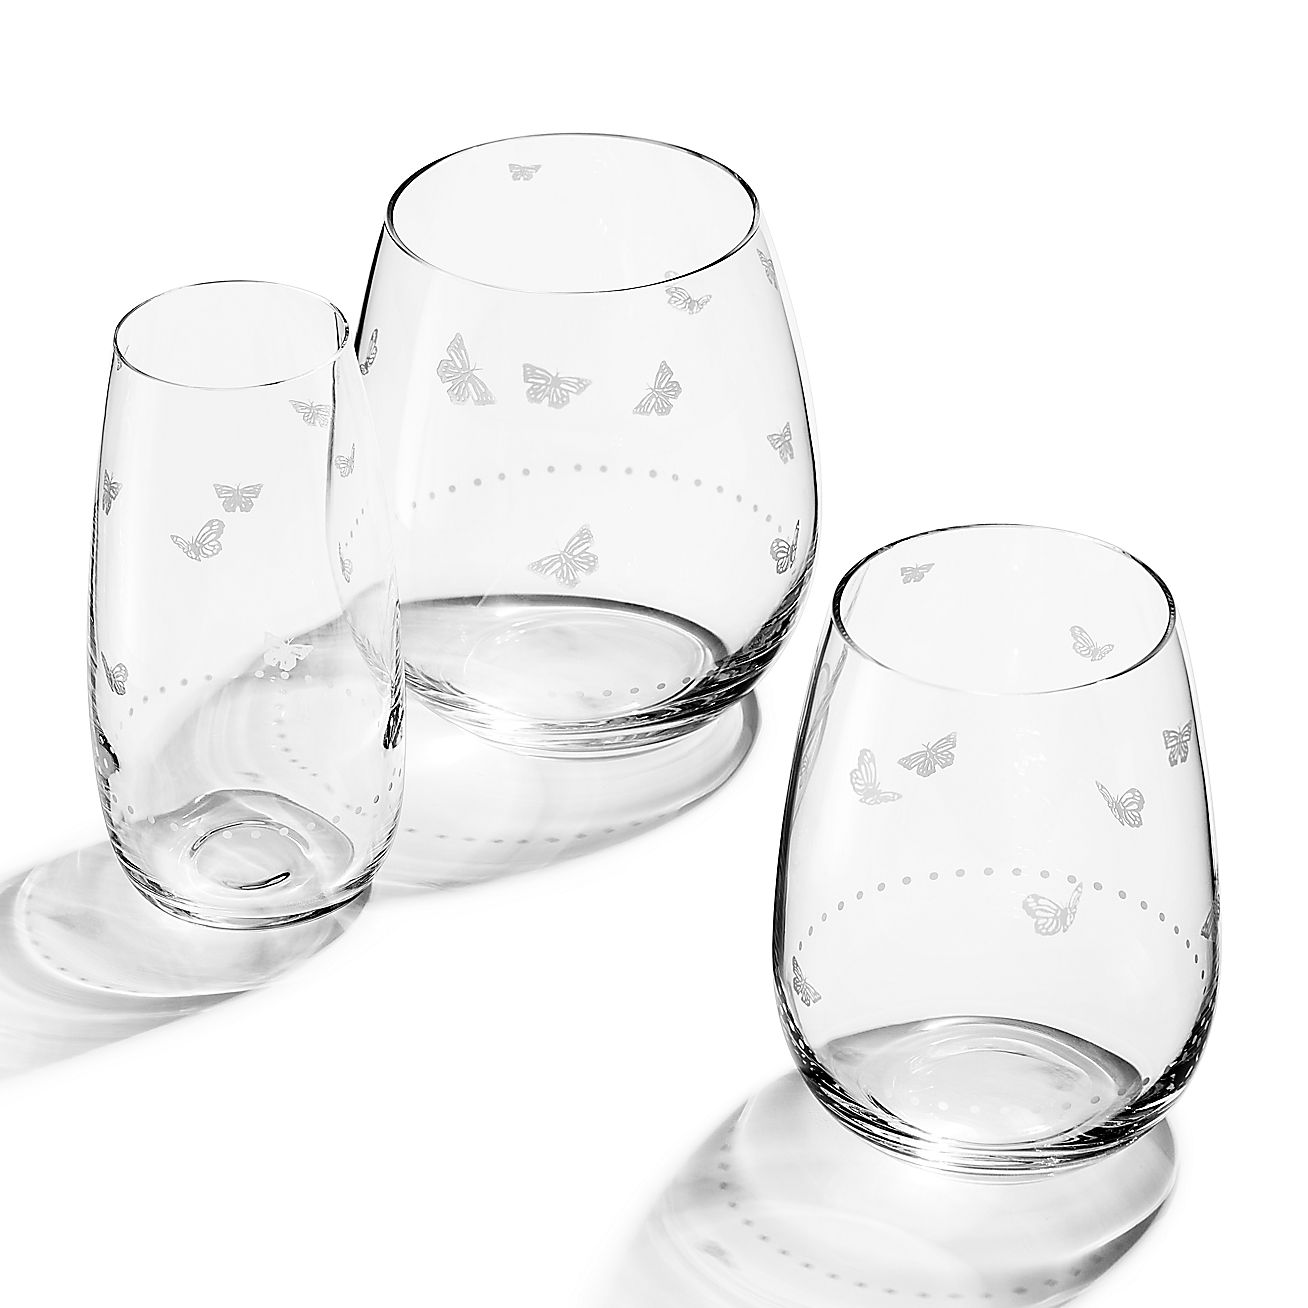 Tiffany Home Essentials Stemless White Wine Glasses